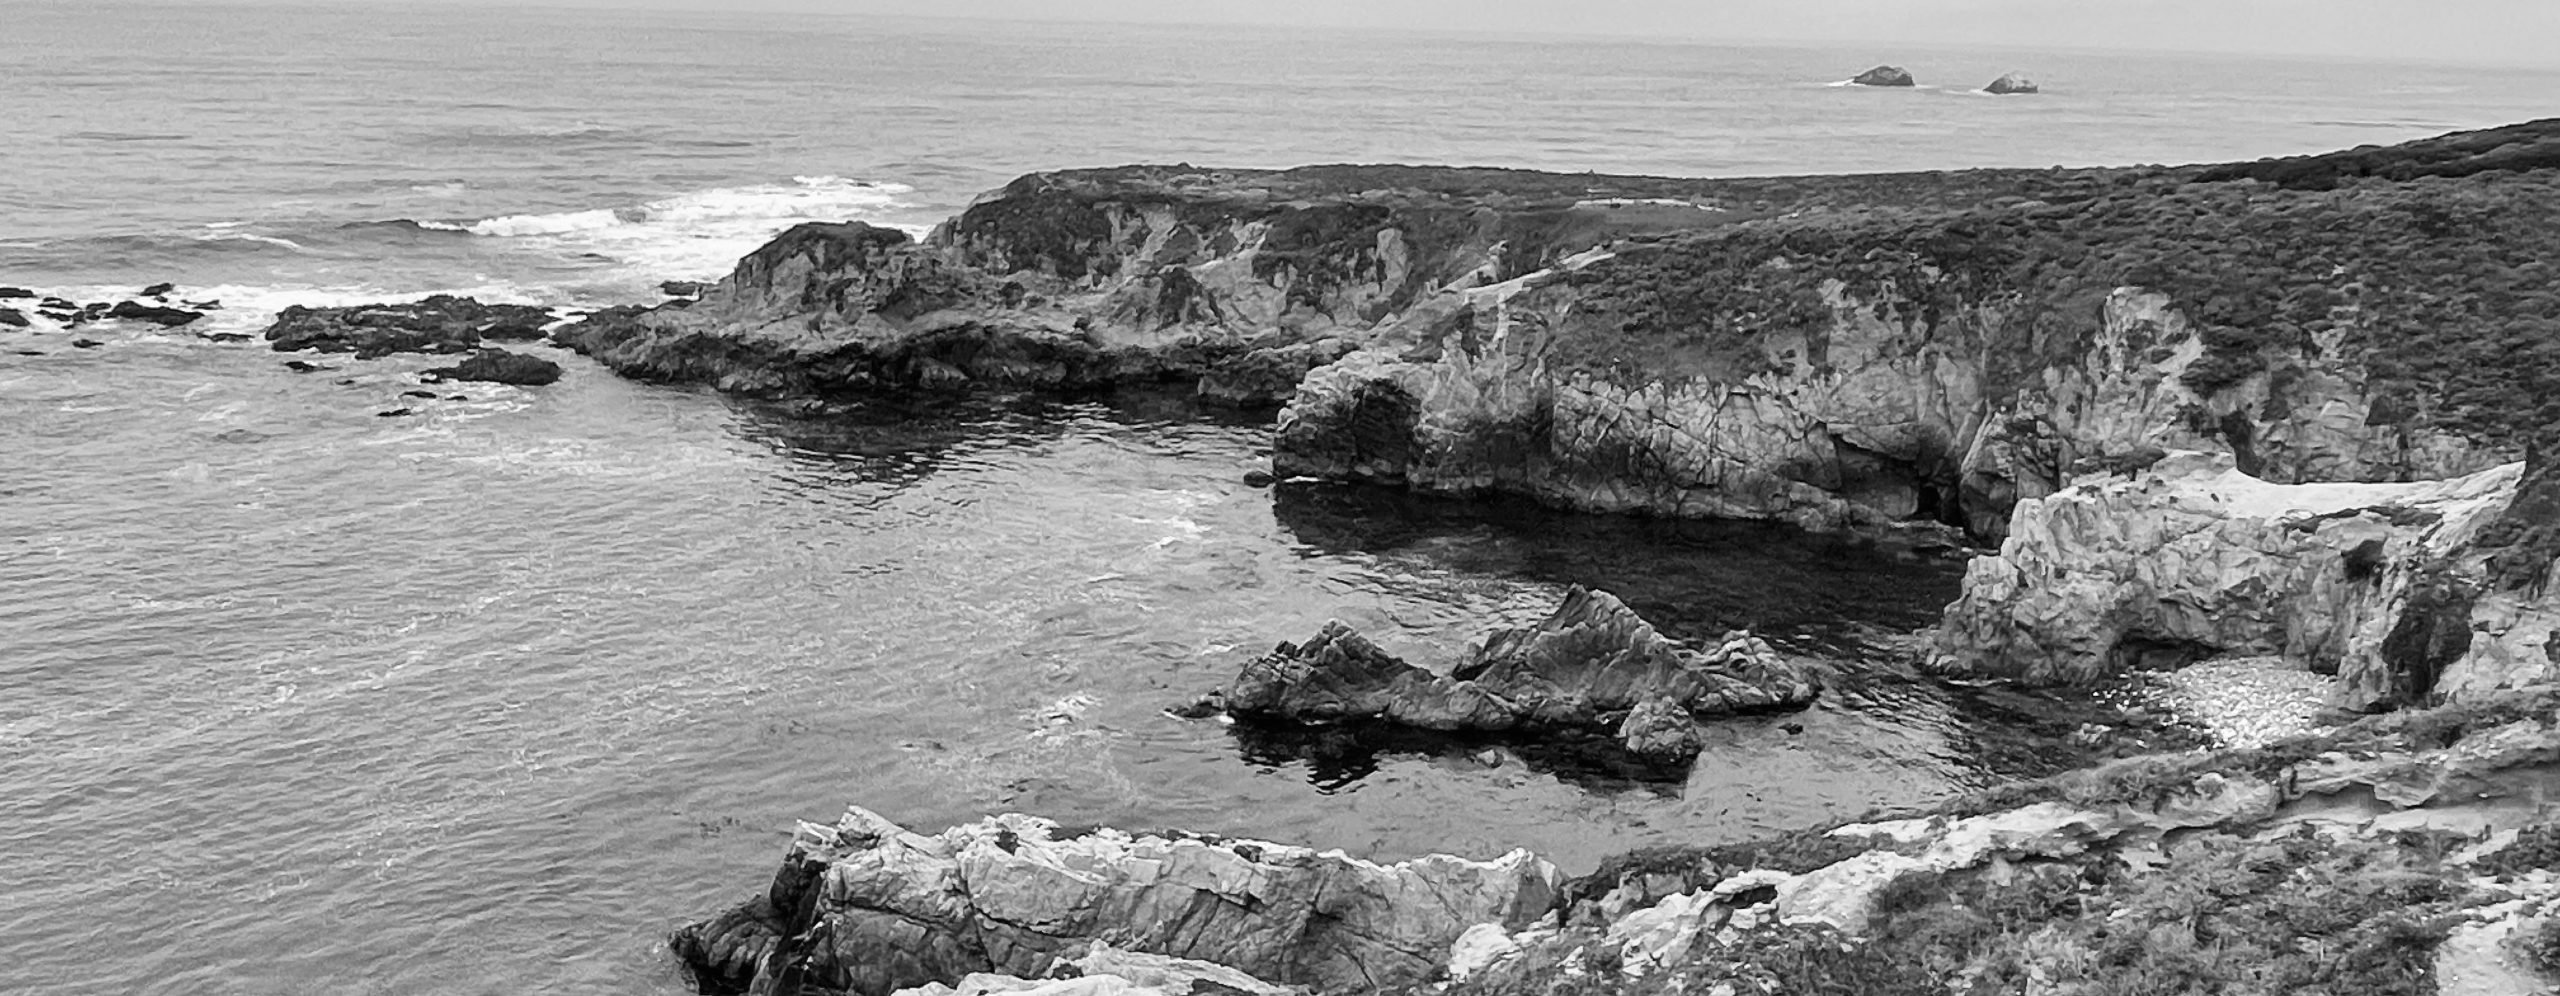 California coast, black and white